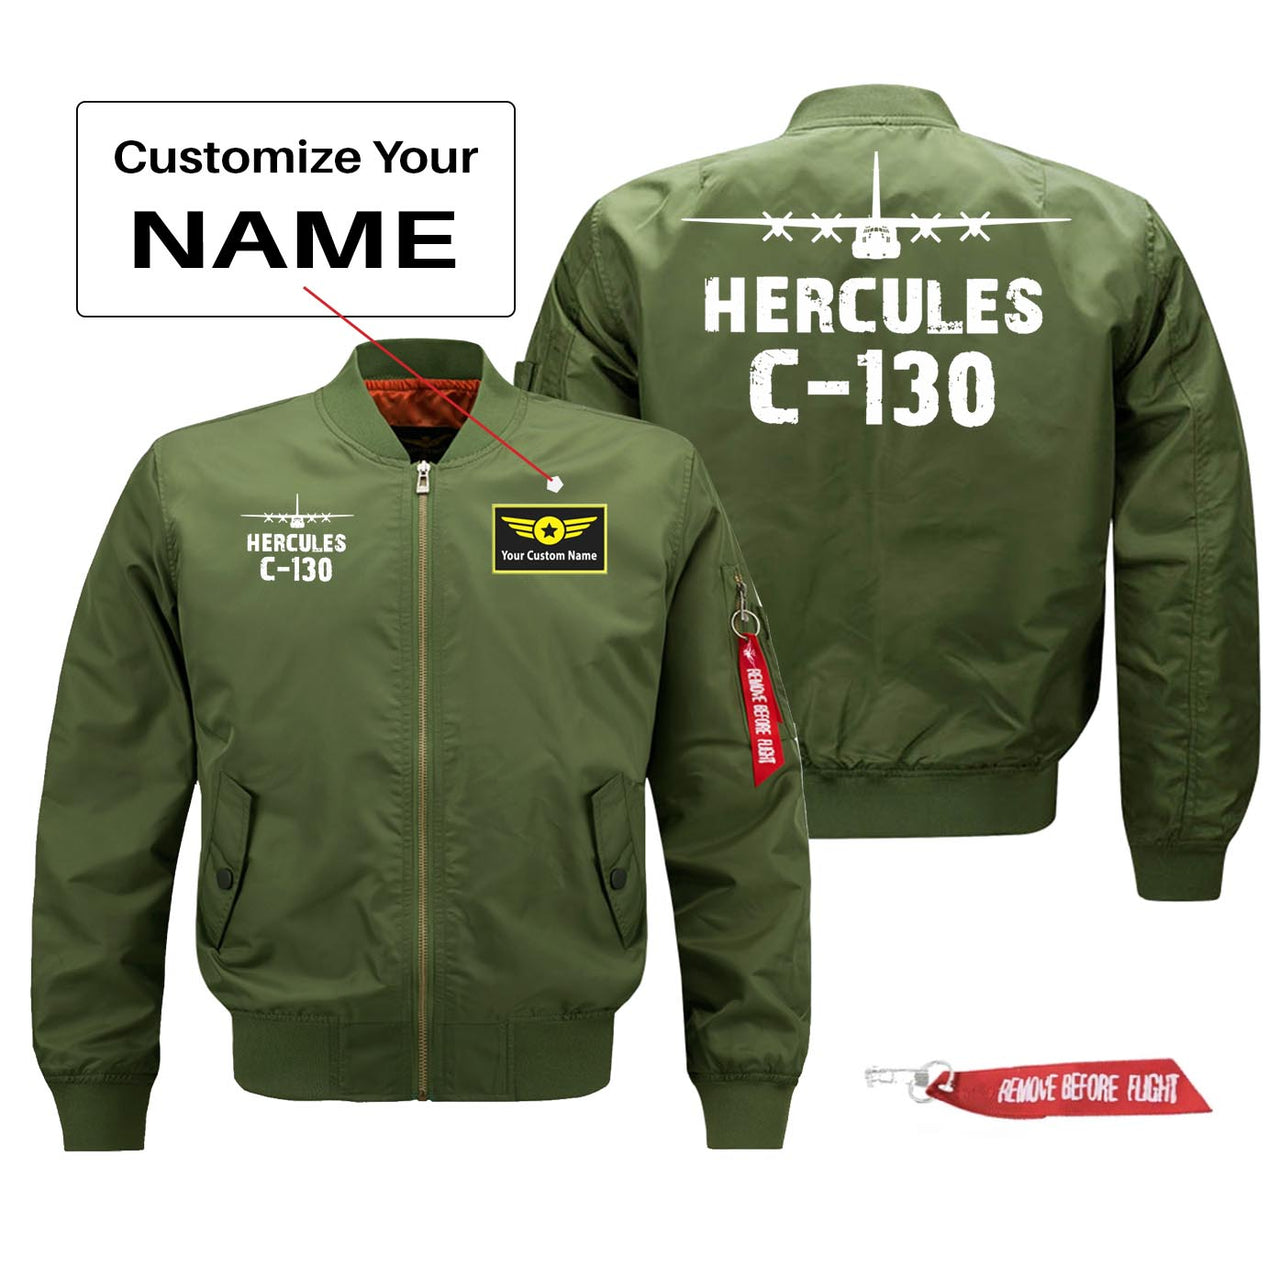 Hercules C-130 Silhouette & Designed Pilot Jackets (Customizable)